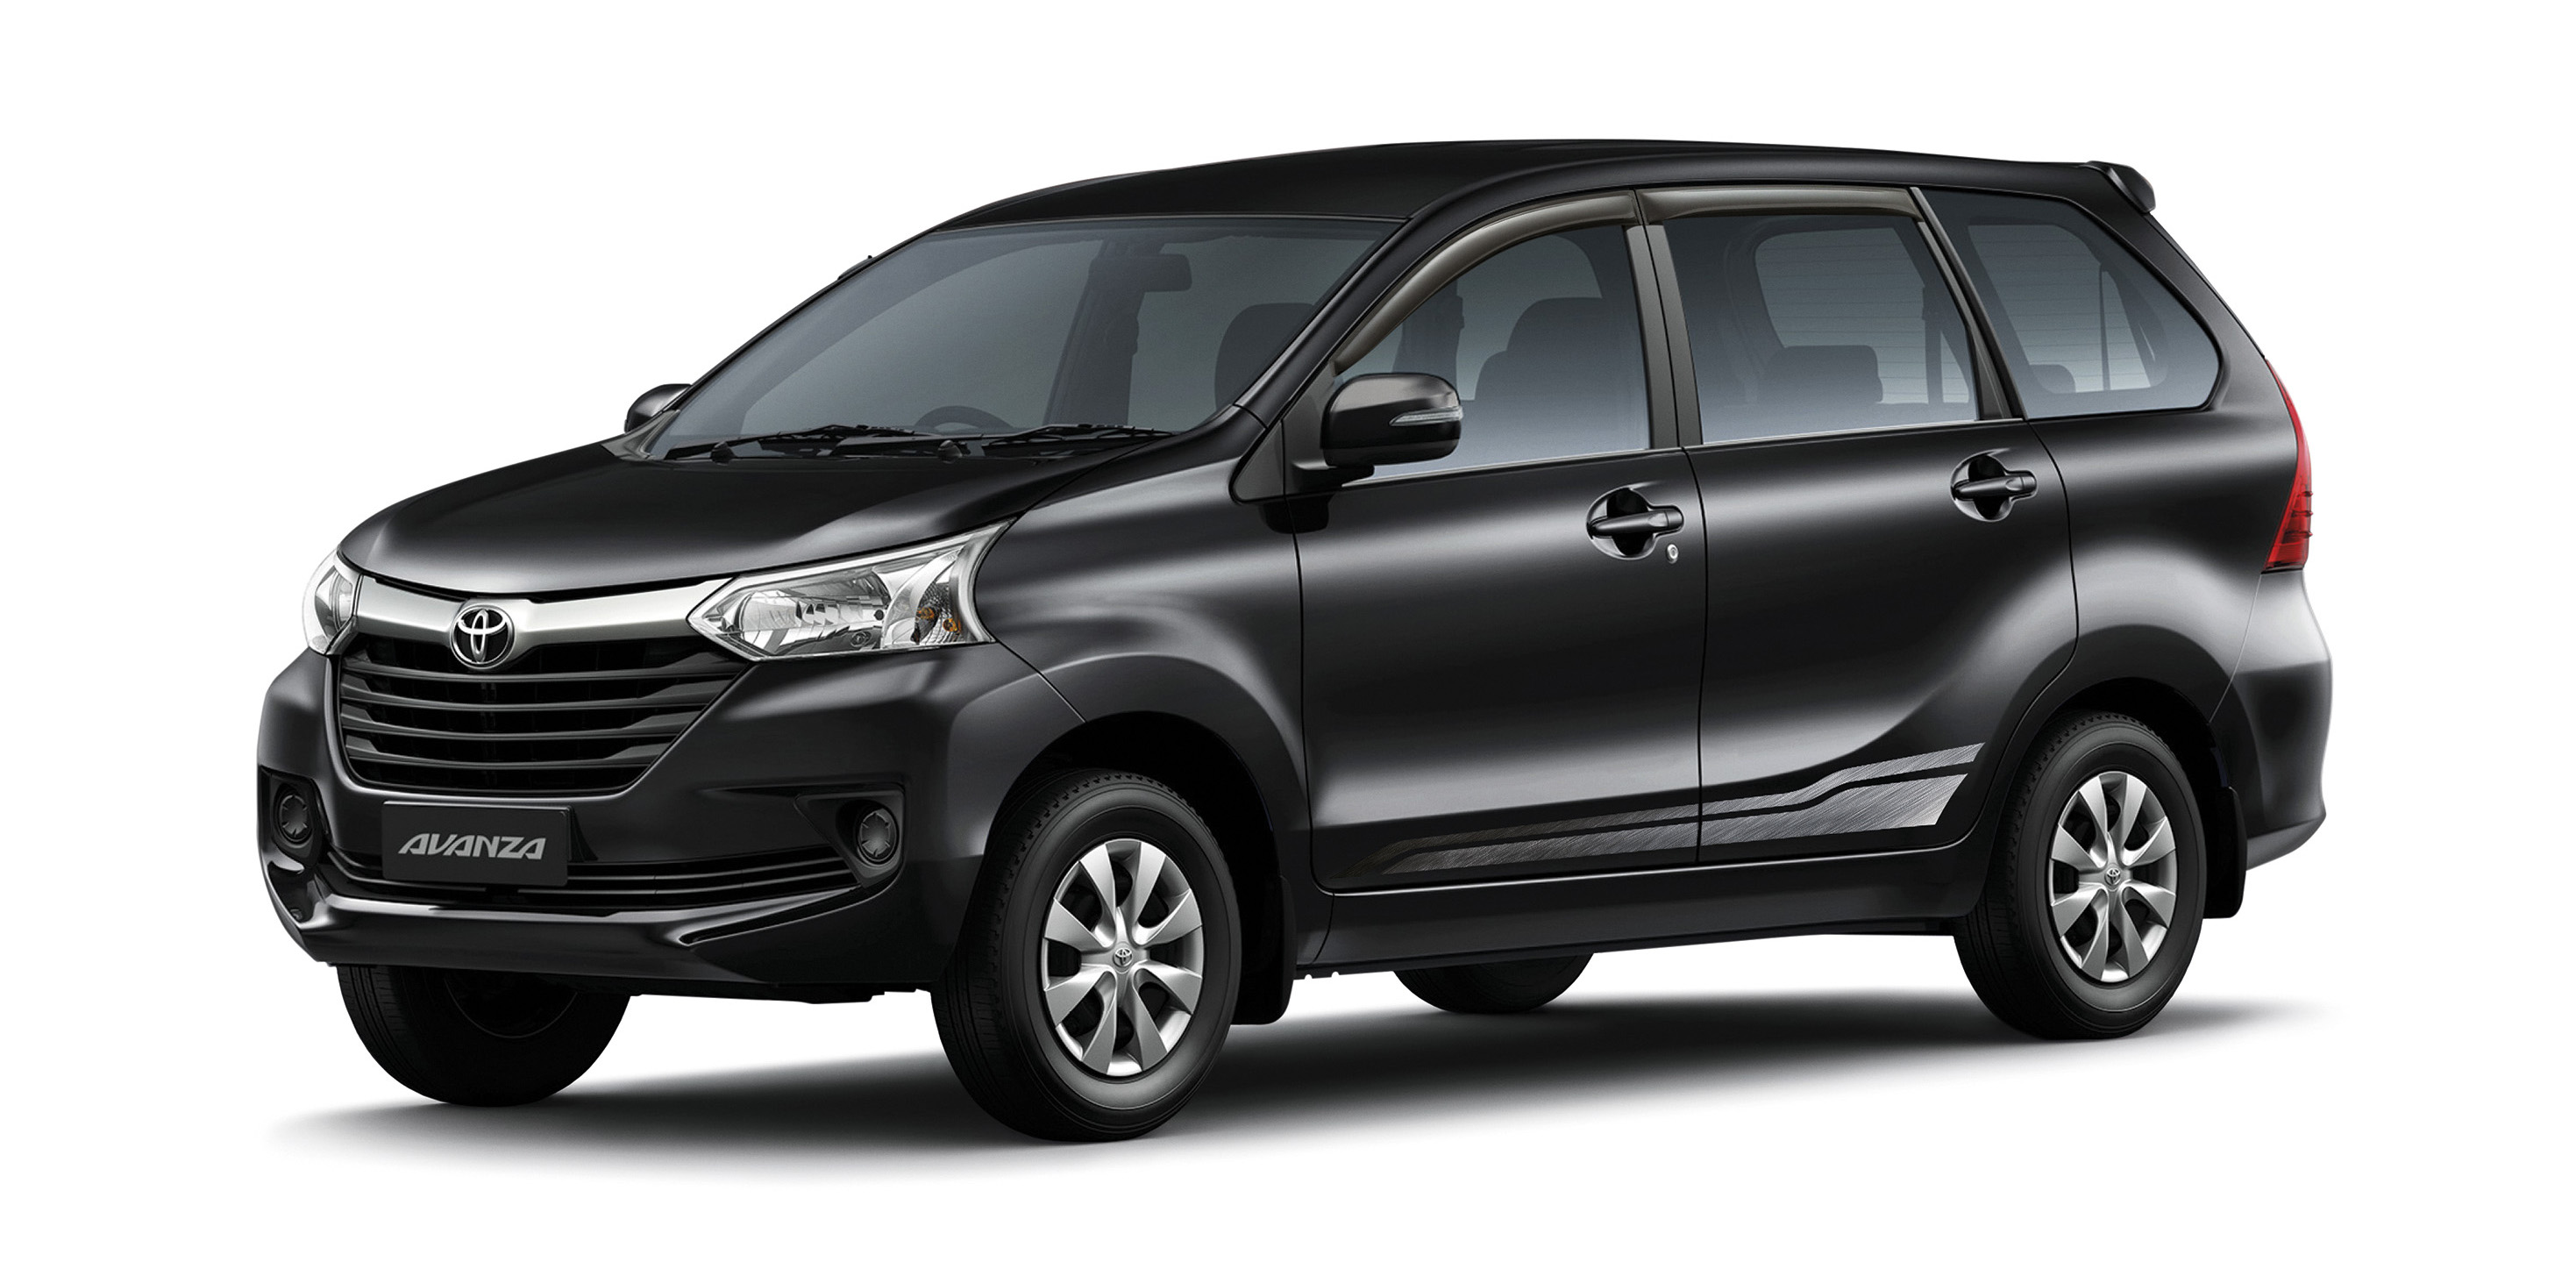 Toyota Avanza facelift appears on website, fr RM68k Paul Tan  Image 390049